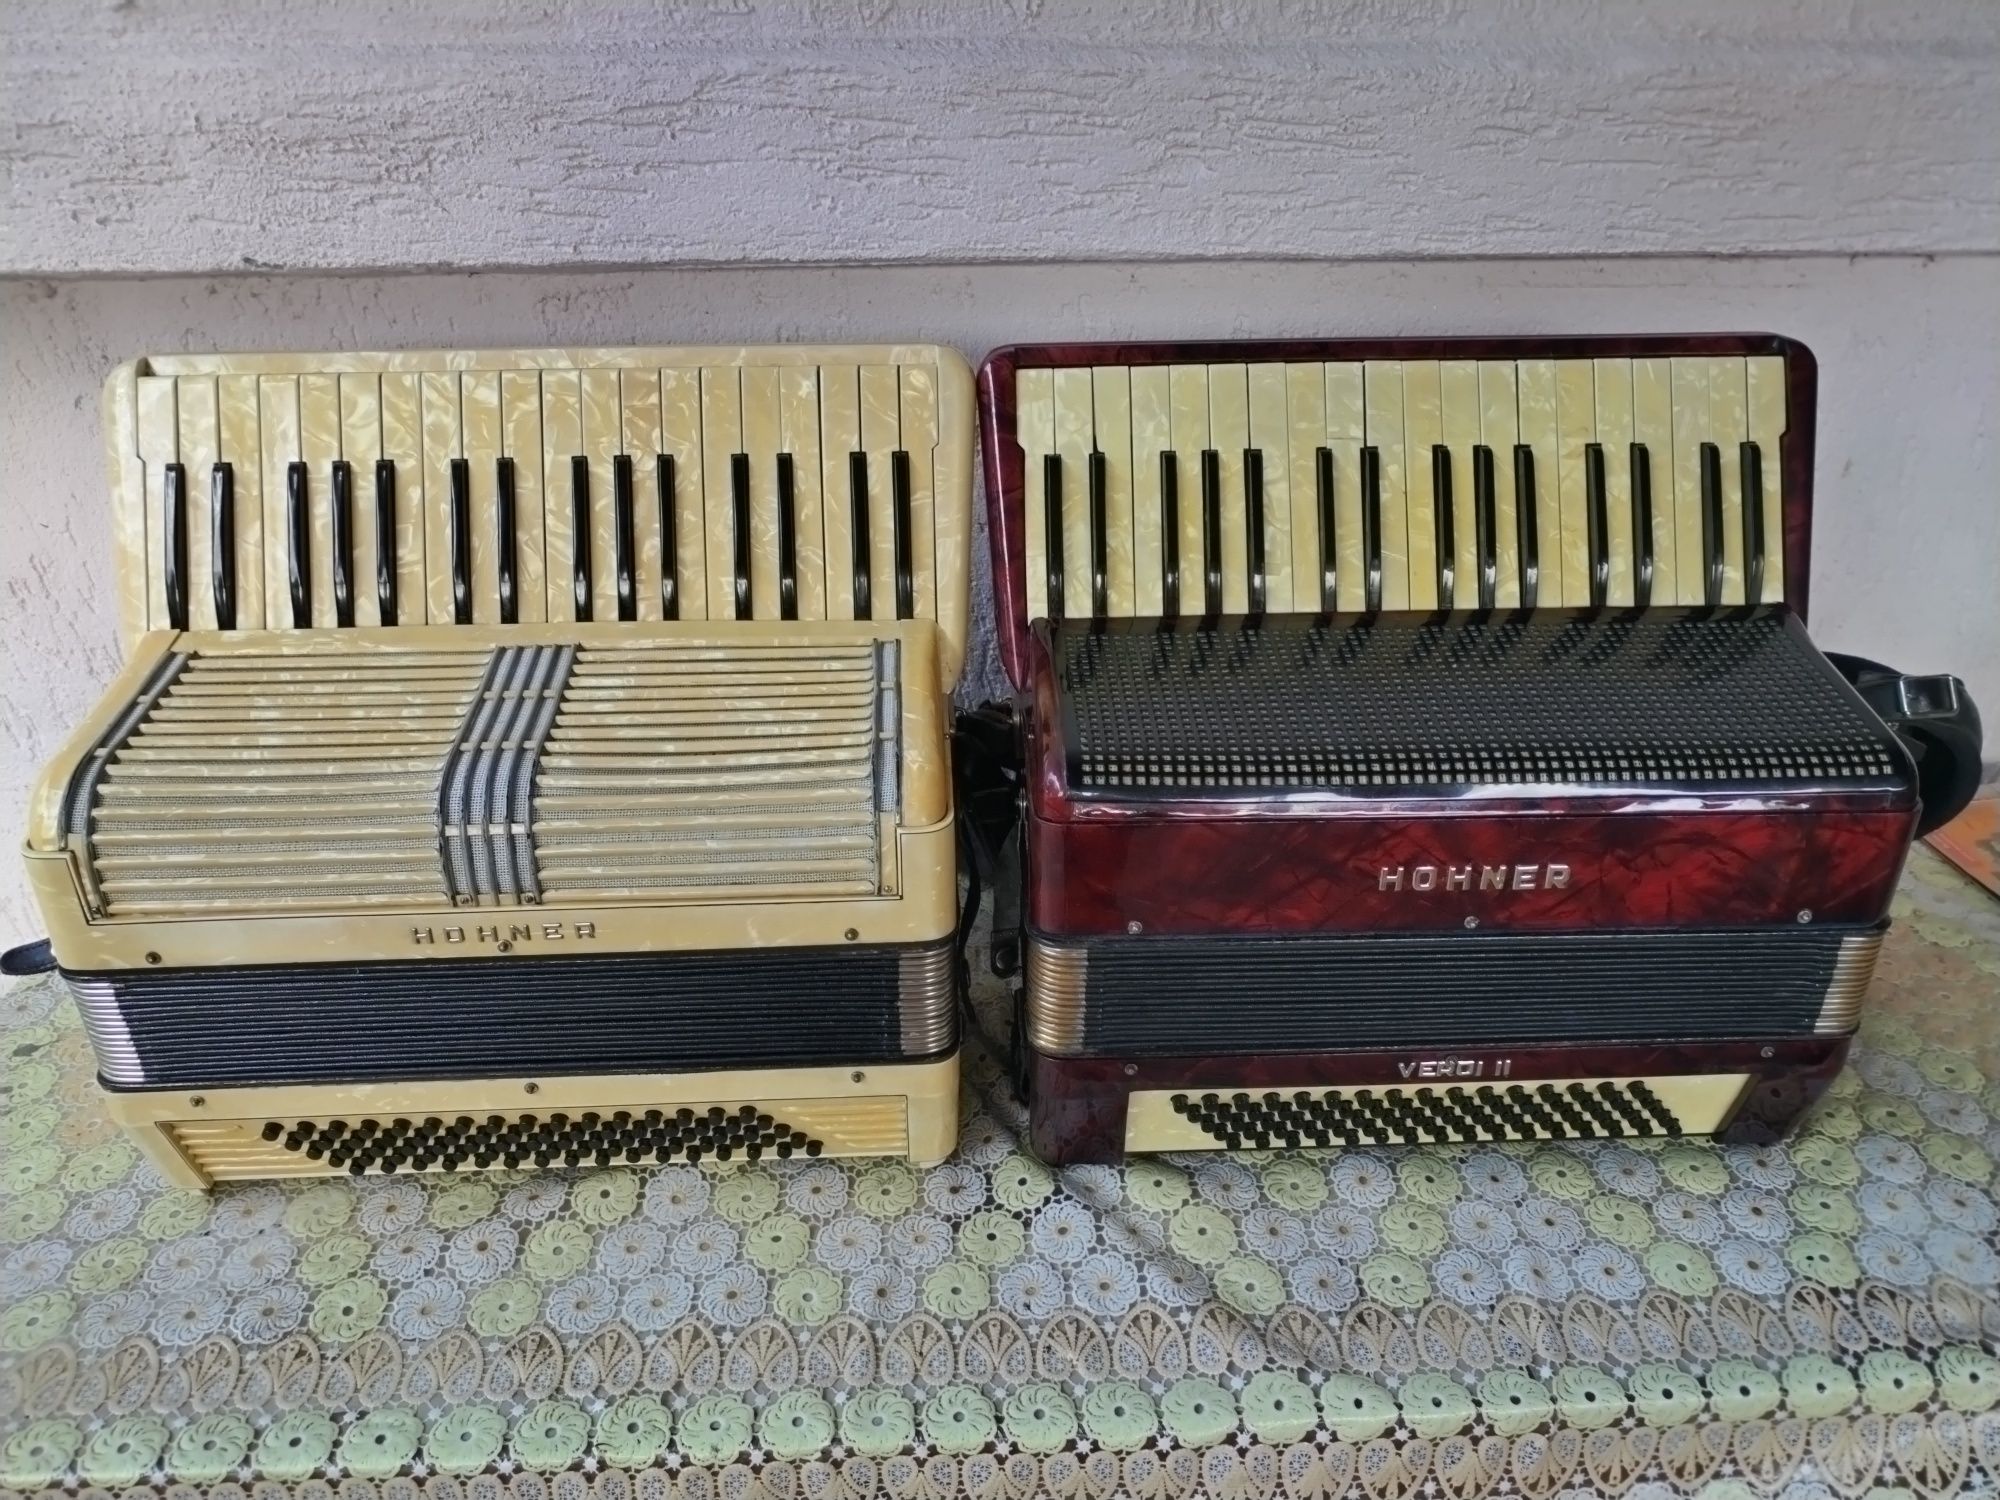 Vând acordeon Hohner Verdi 2 cu 80 basi